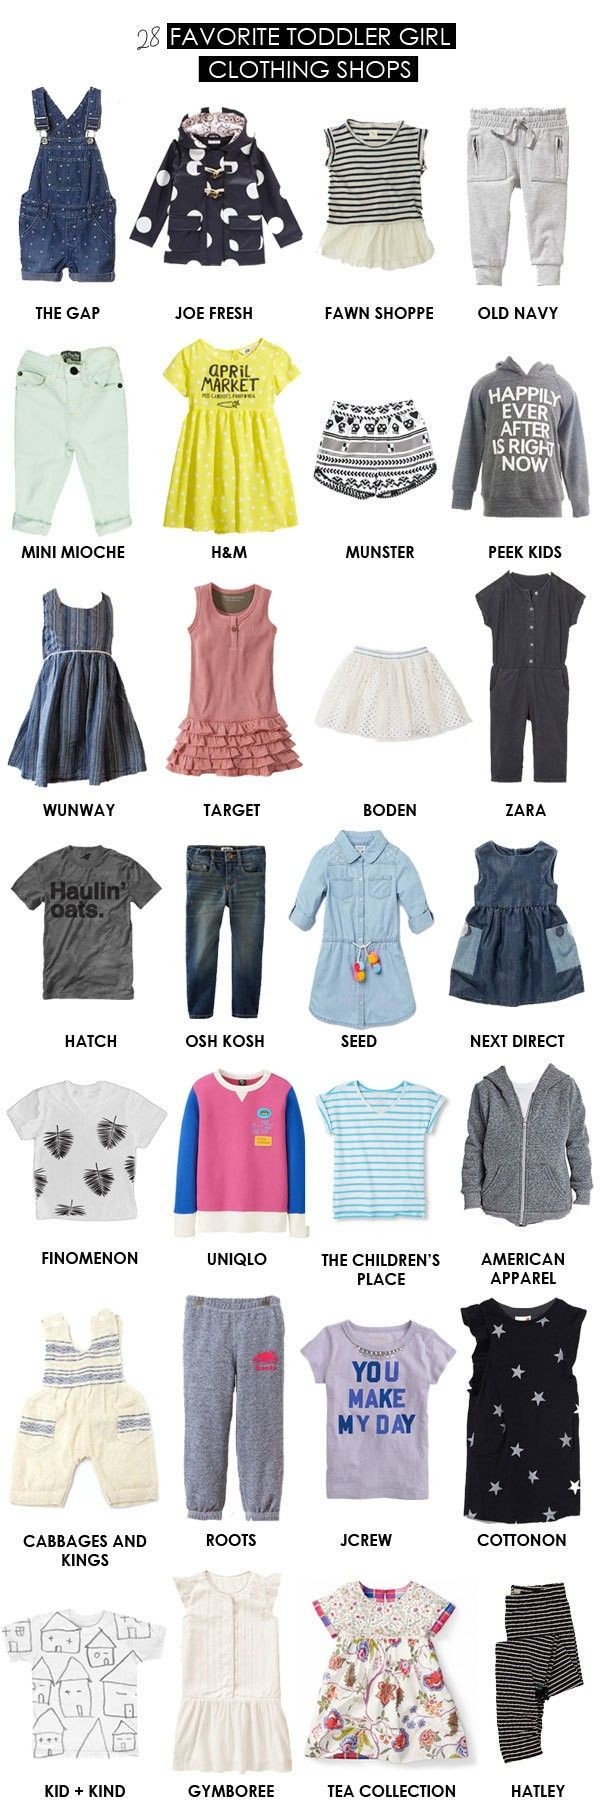 favorite toddler girl clothing stores